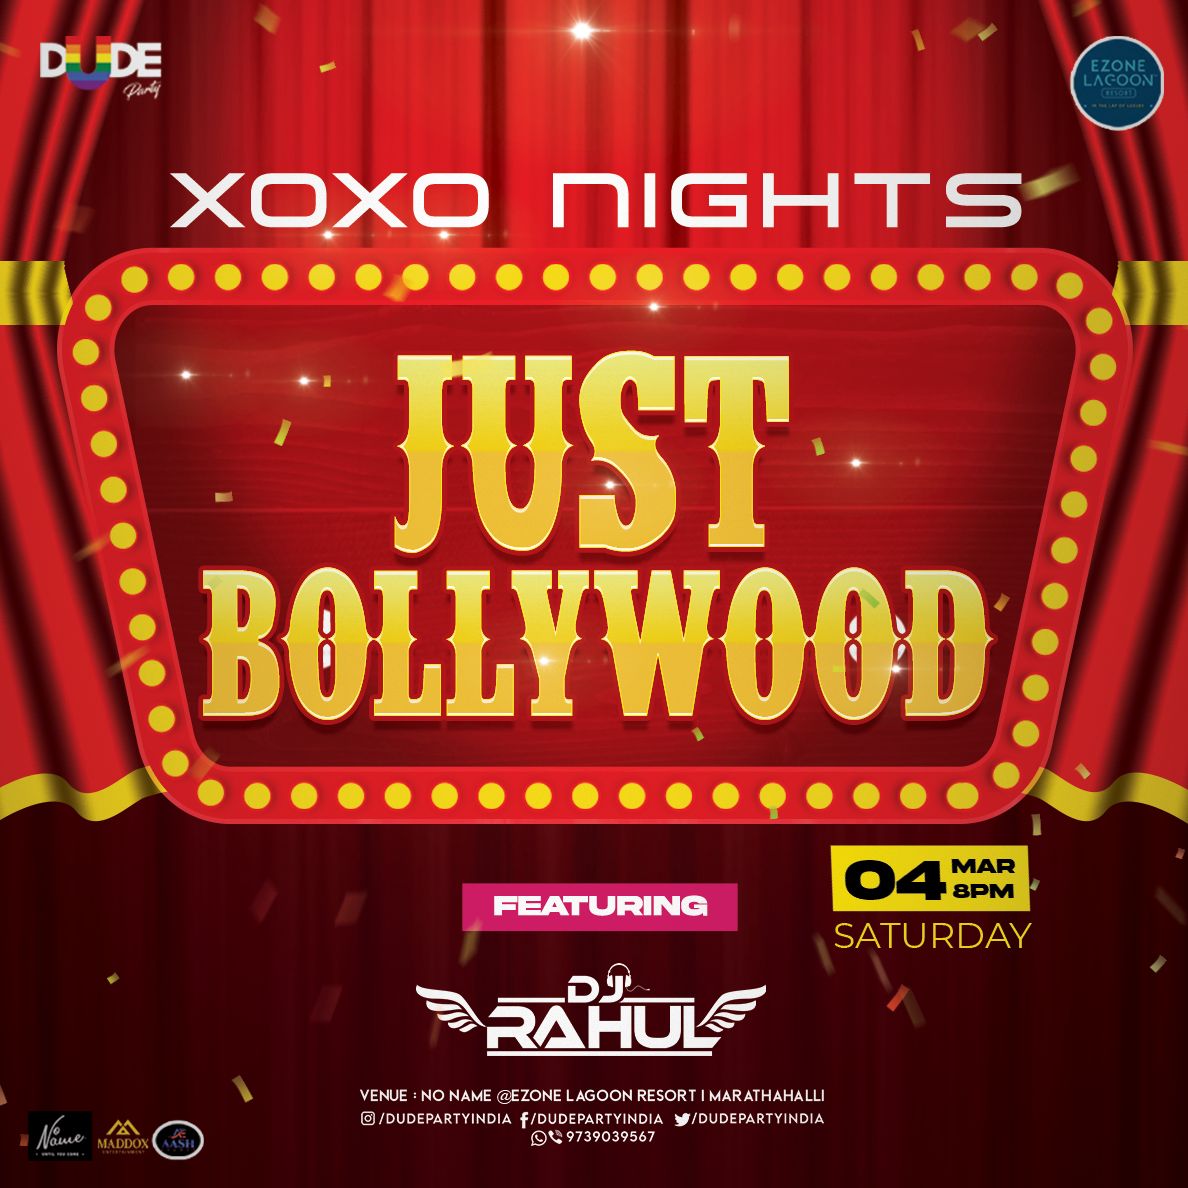 XOXO Nights Just Bollywood Dude Party India